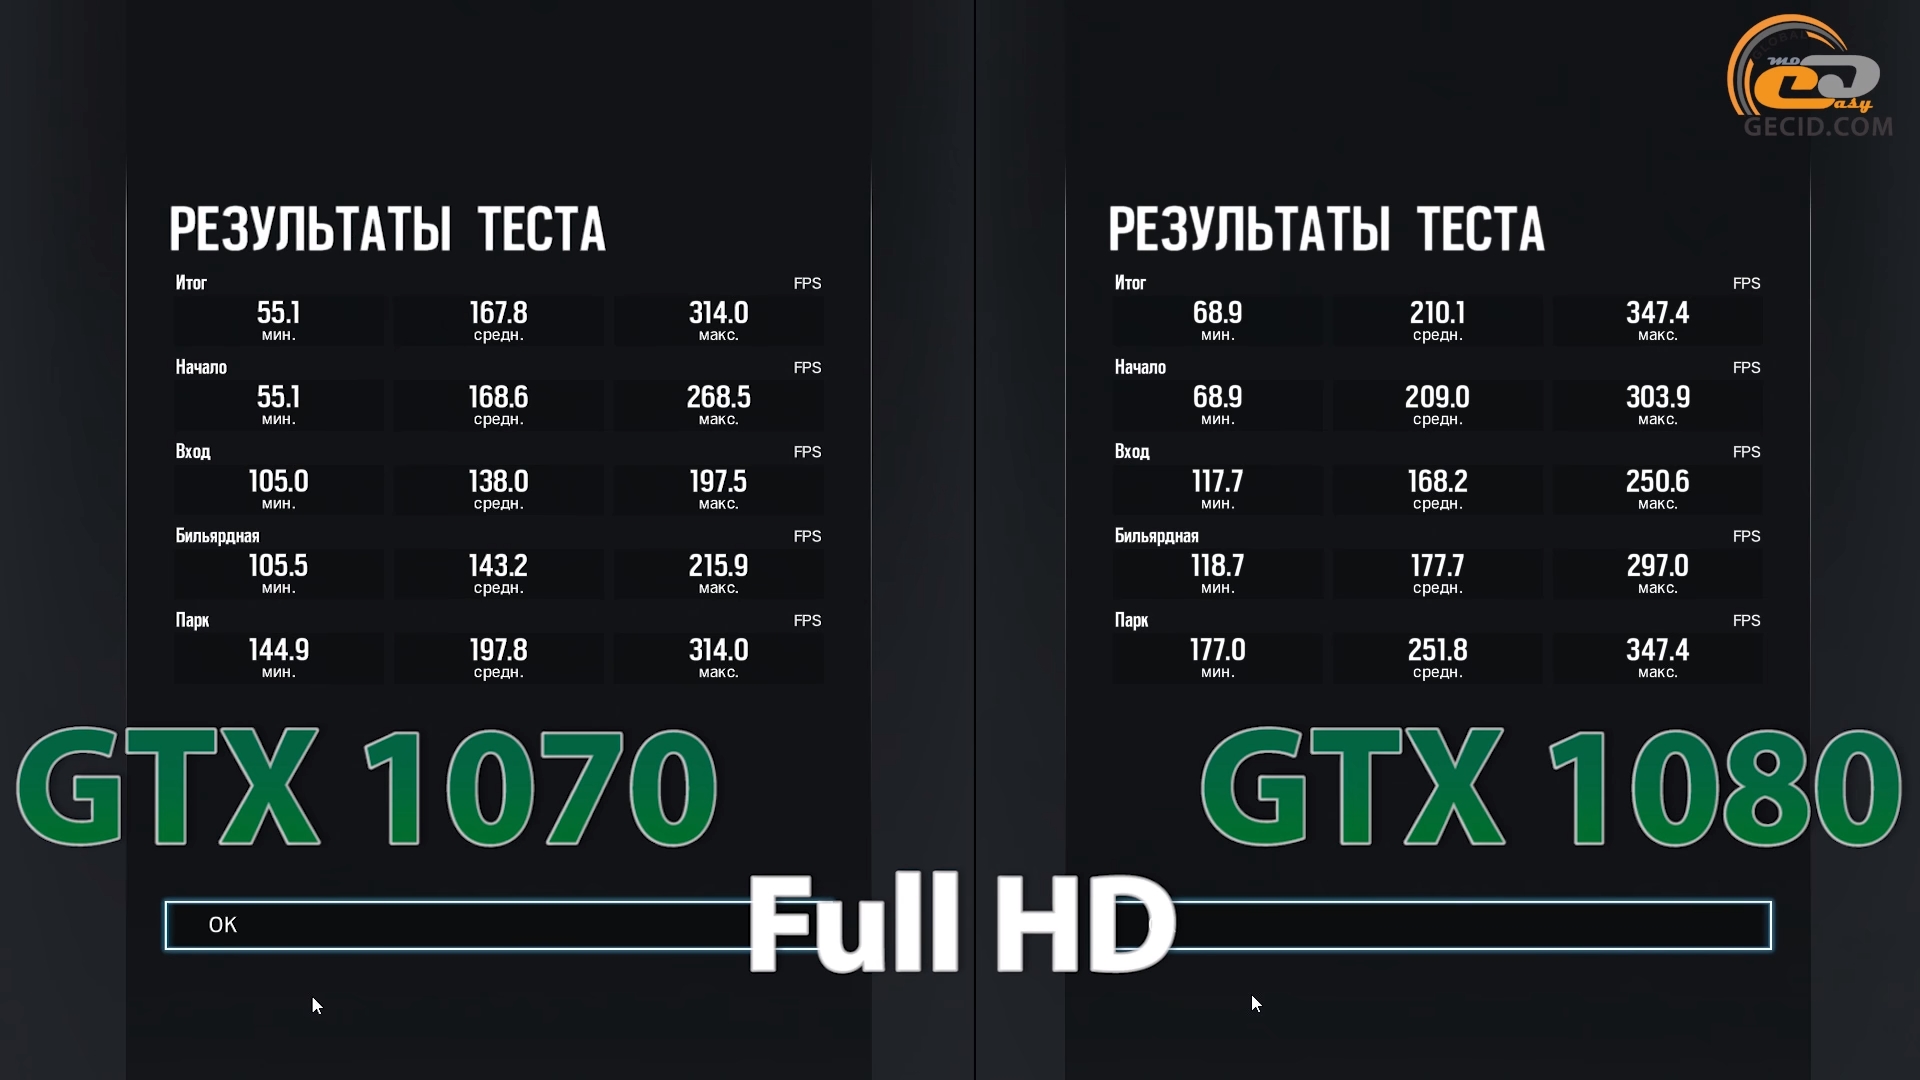 Сравнение GeForce GTX 1070 vs GeForce GTX 1080 11Gbps для игр в Full HD и  Quad HD GECID.com. Страница 1